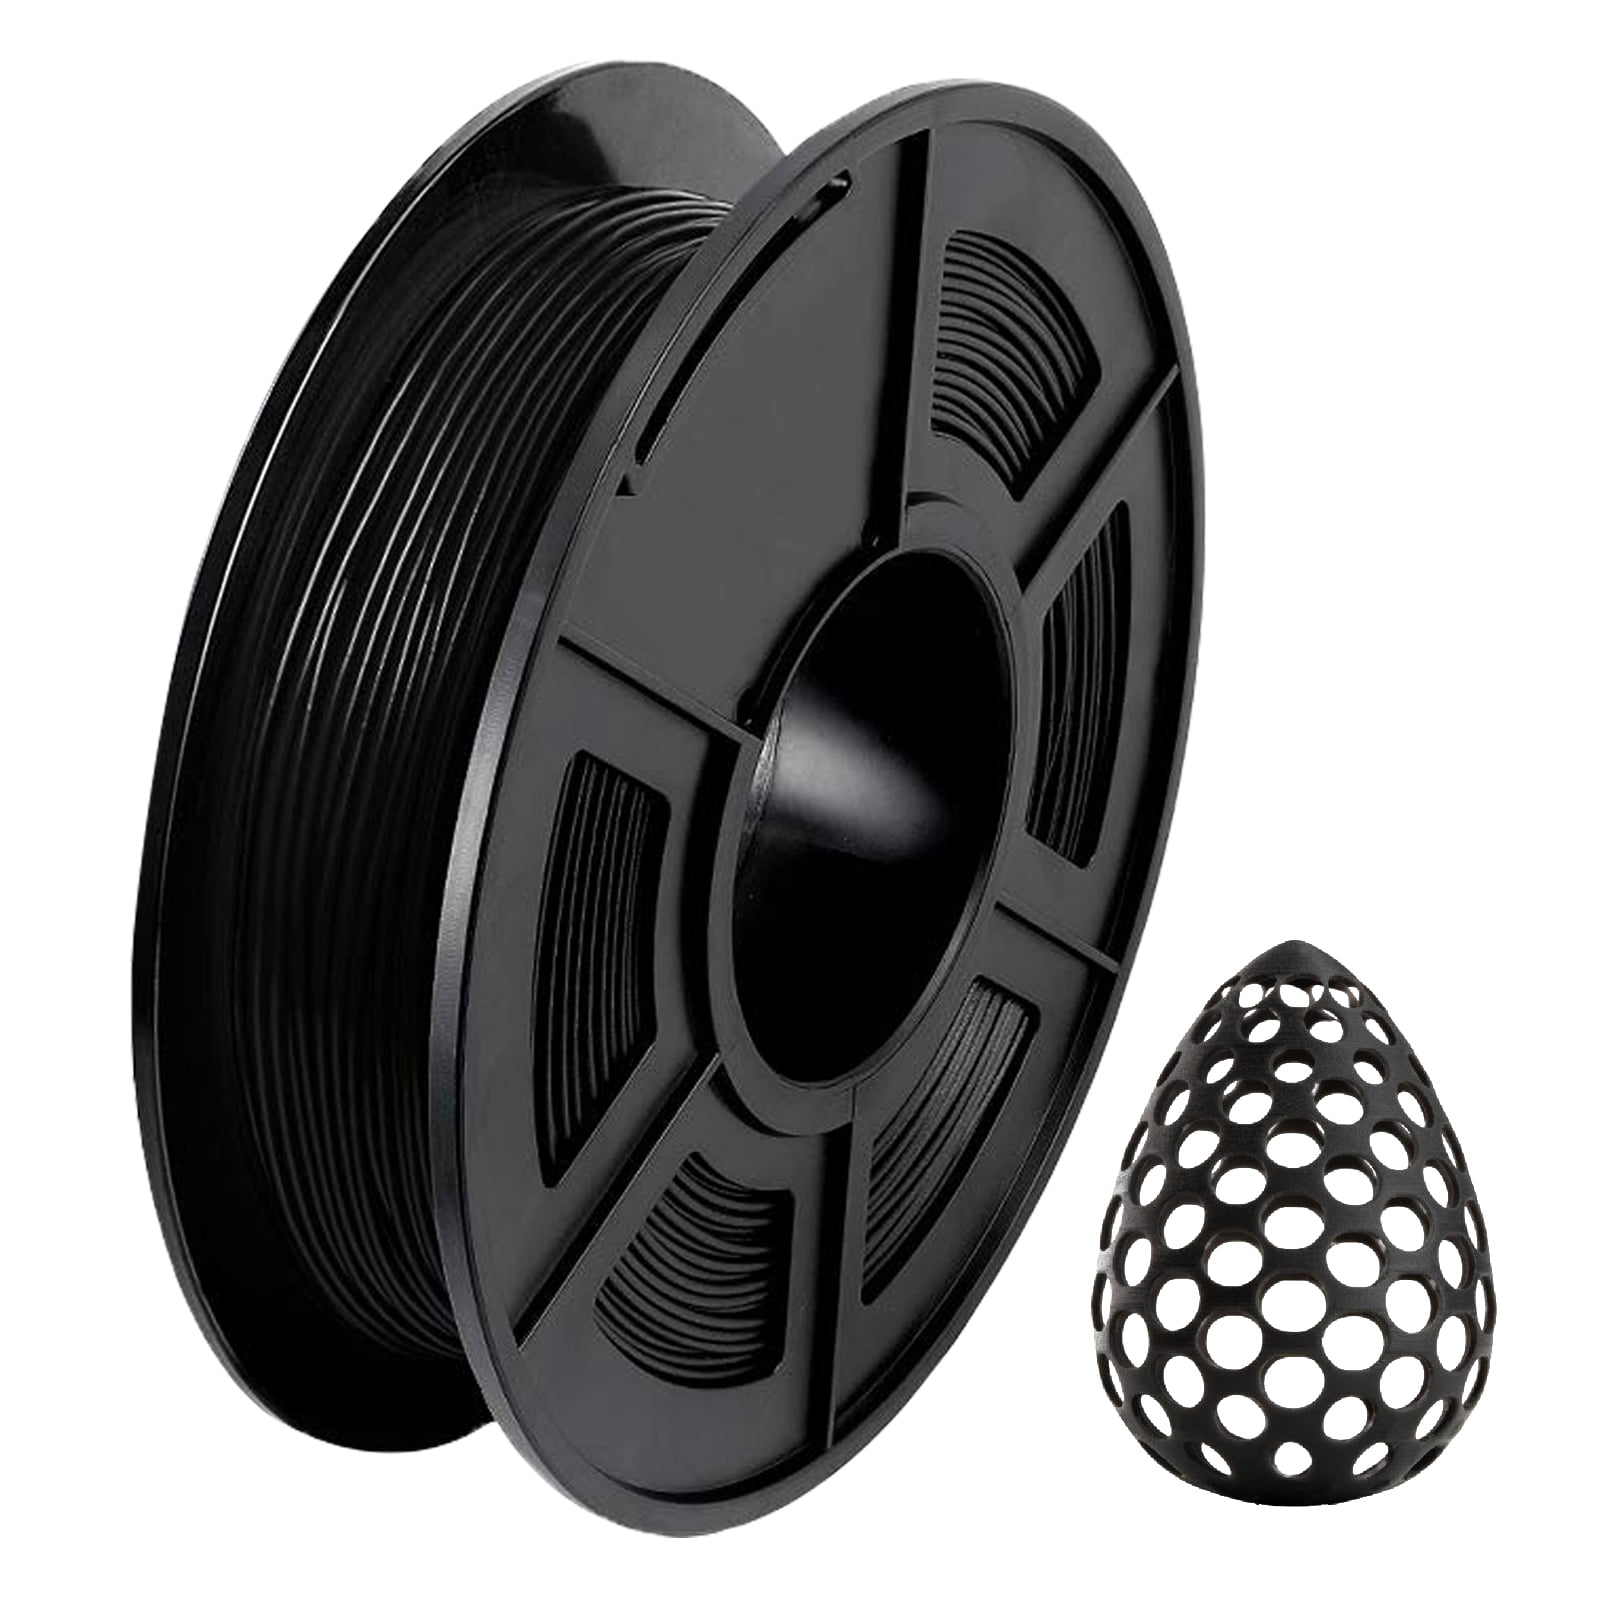 ABS Black 3D Printer Filament 1.75mm 1KG/2.2LB Spool Strong printing material 